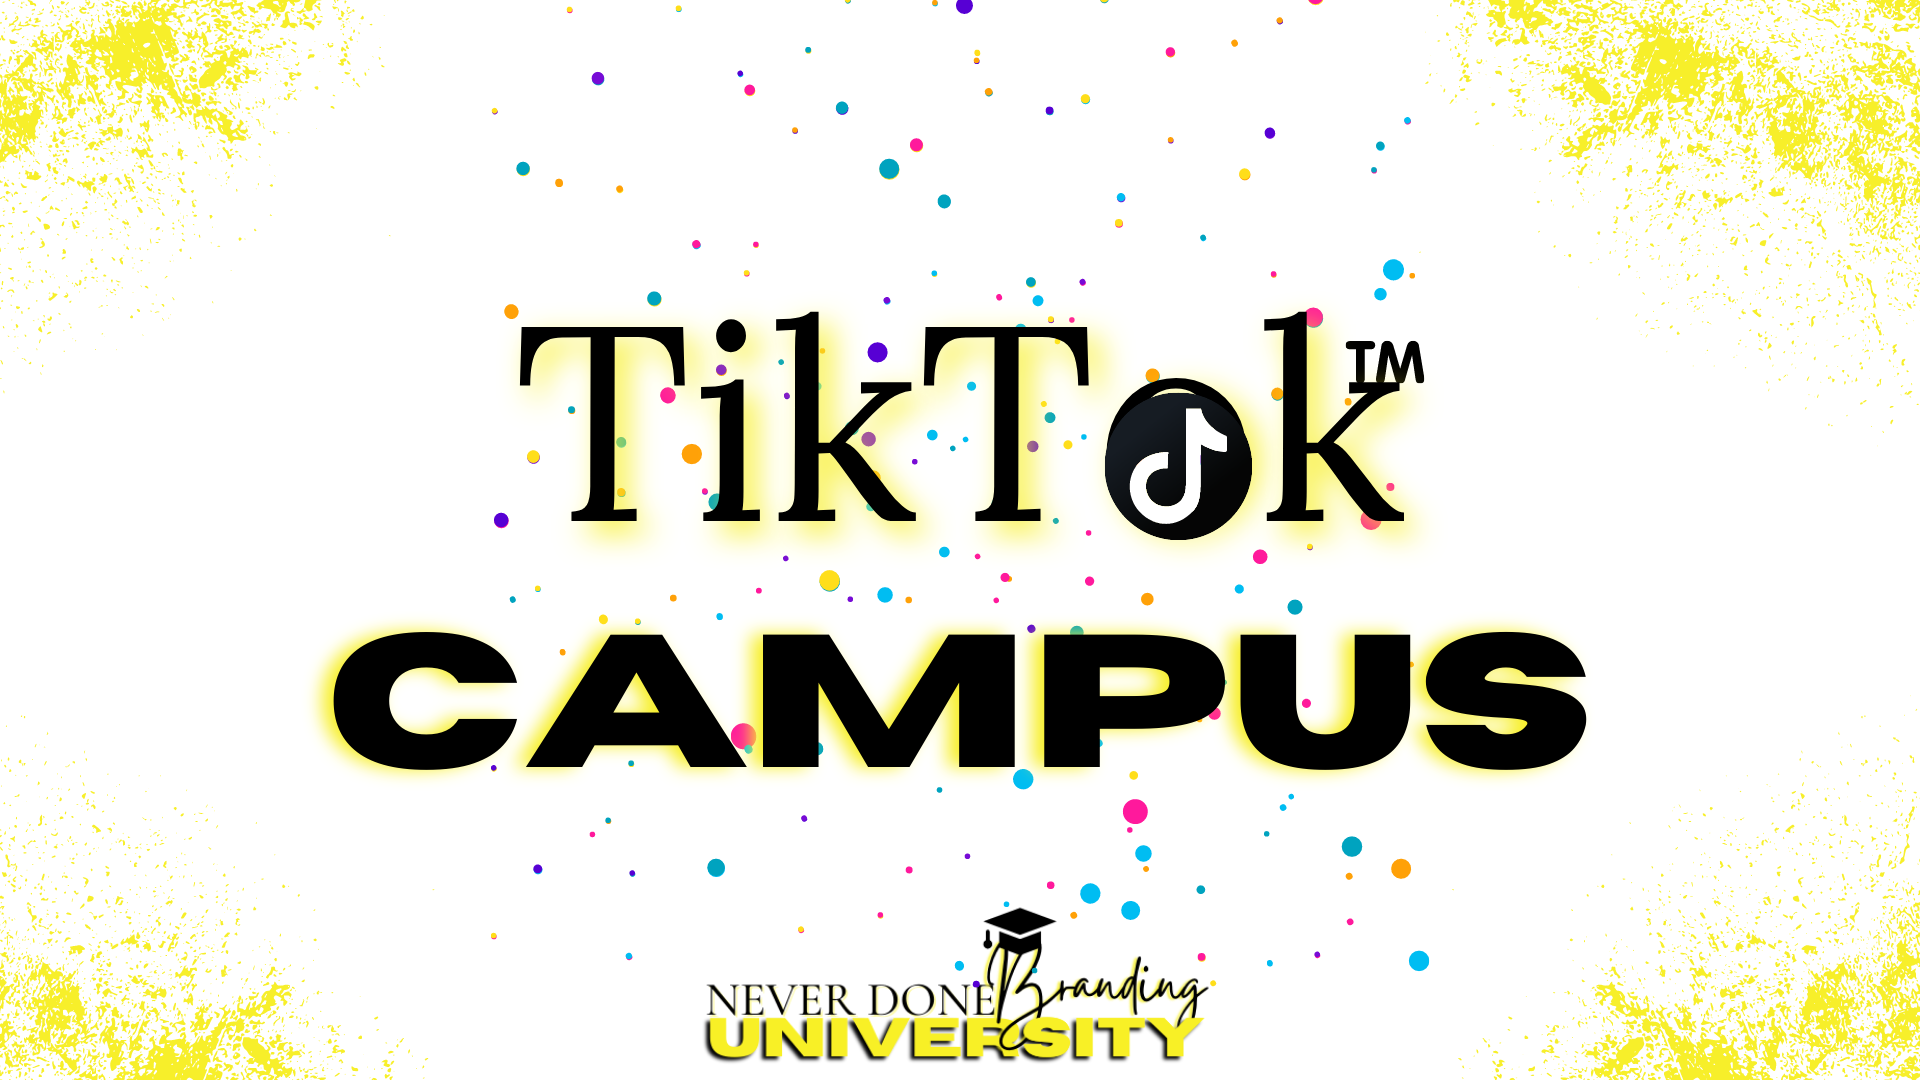 Tiktok campus: Learn how to use tiktok to market your business